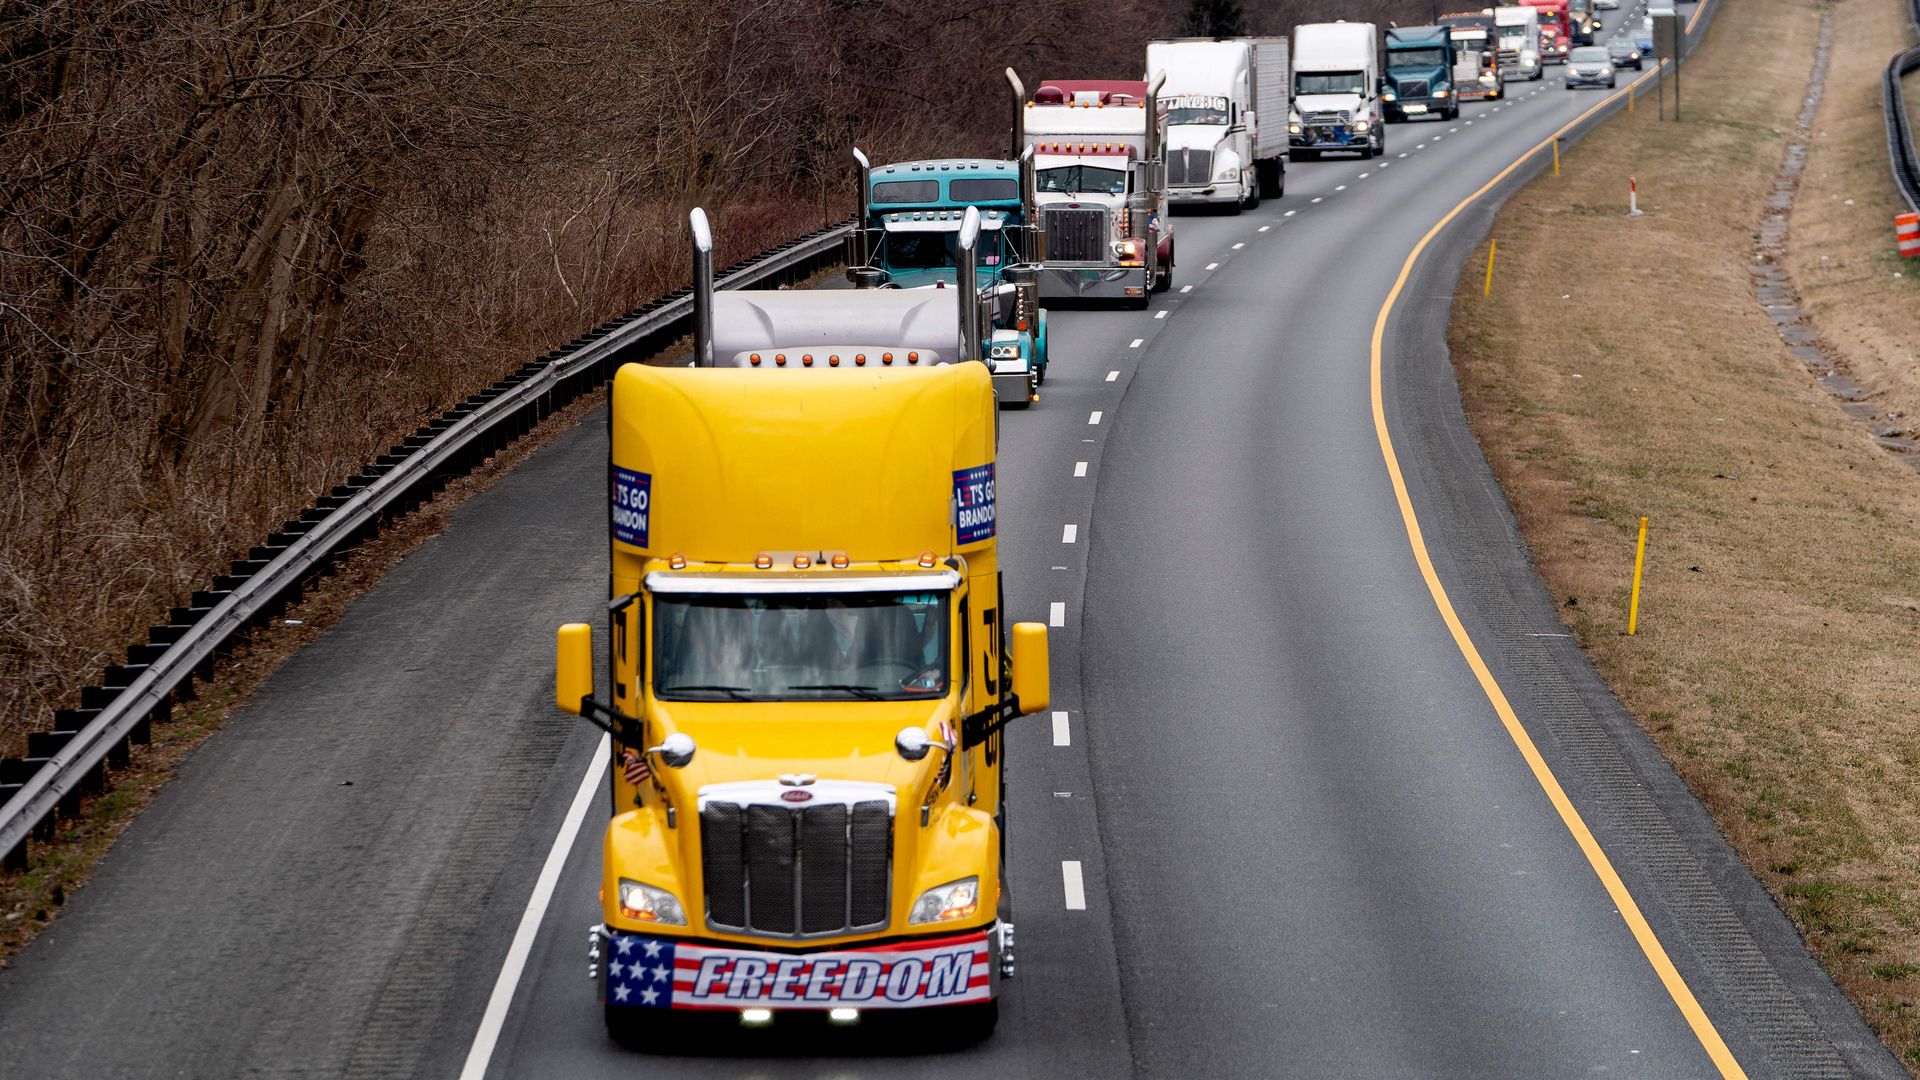 Cars and trucks on a freeway